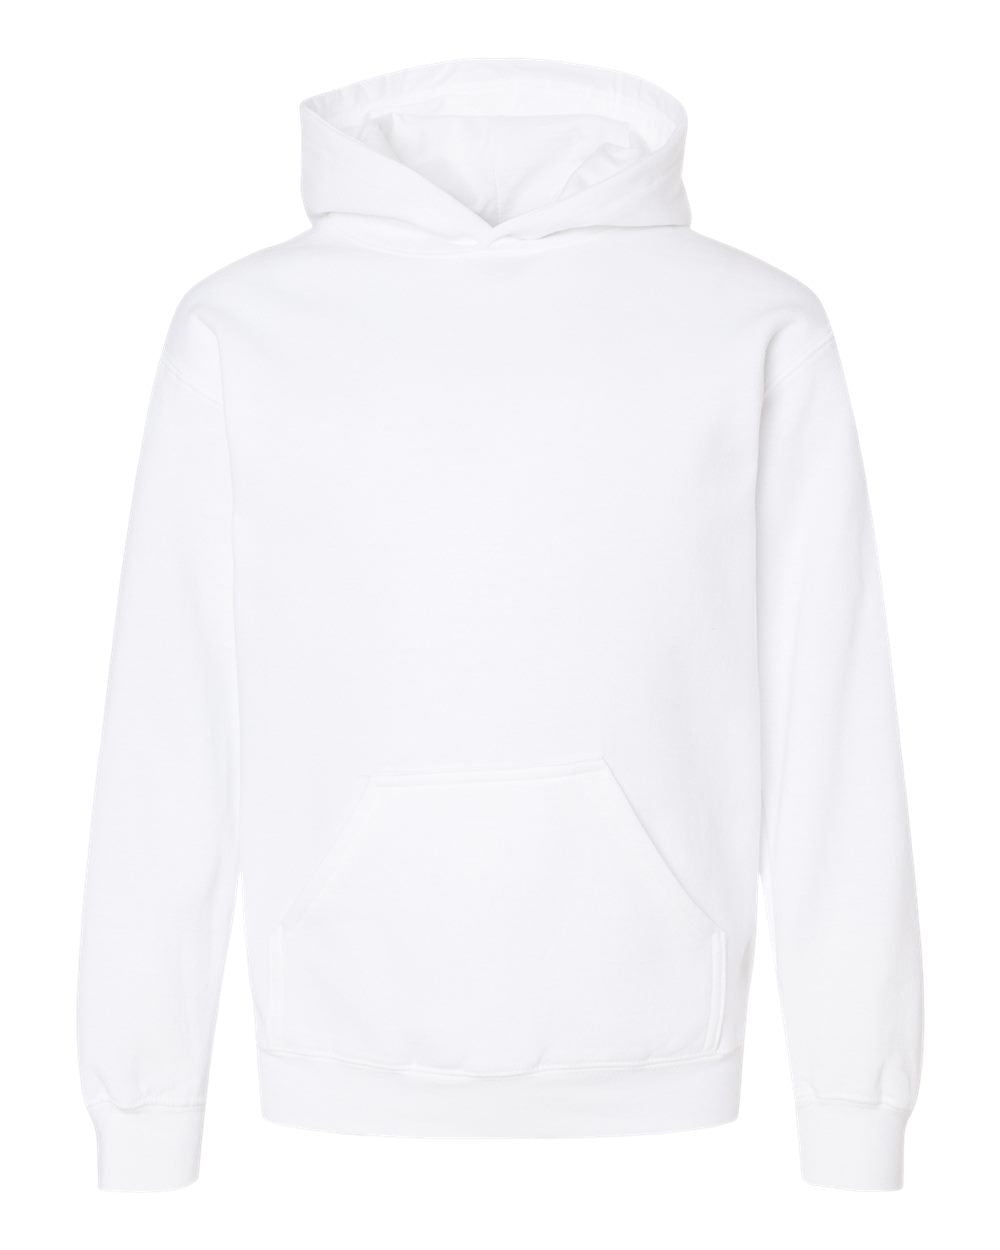 Tultex - Youth Hooded Sweatshirt - 320Y